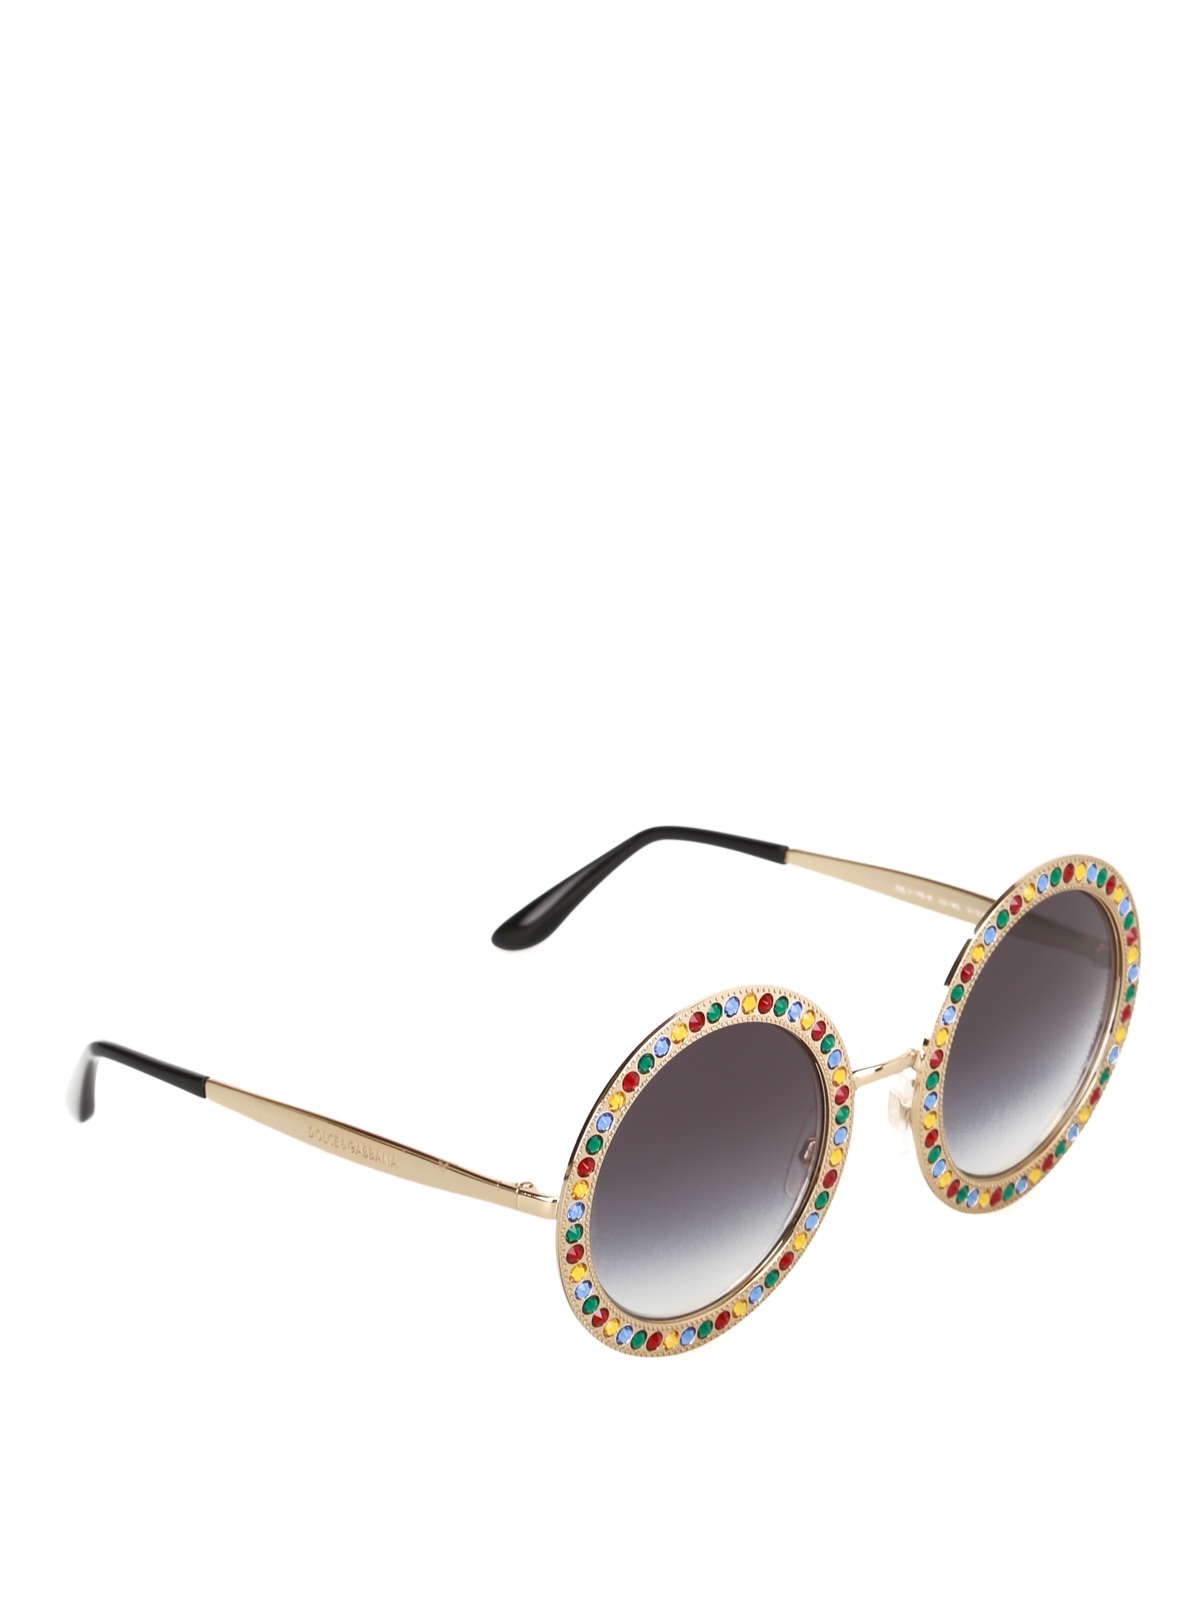 Sunglasses Dolce & Gabbana - Rhinestone embellished sunglasses - DG2170B028G